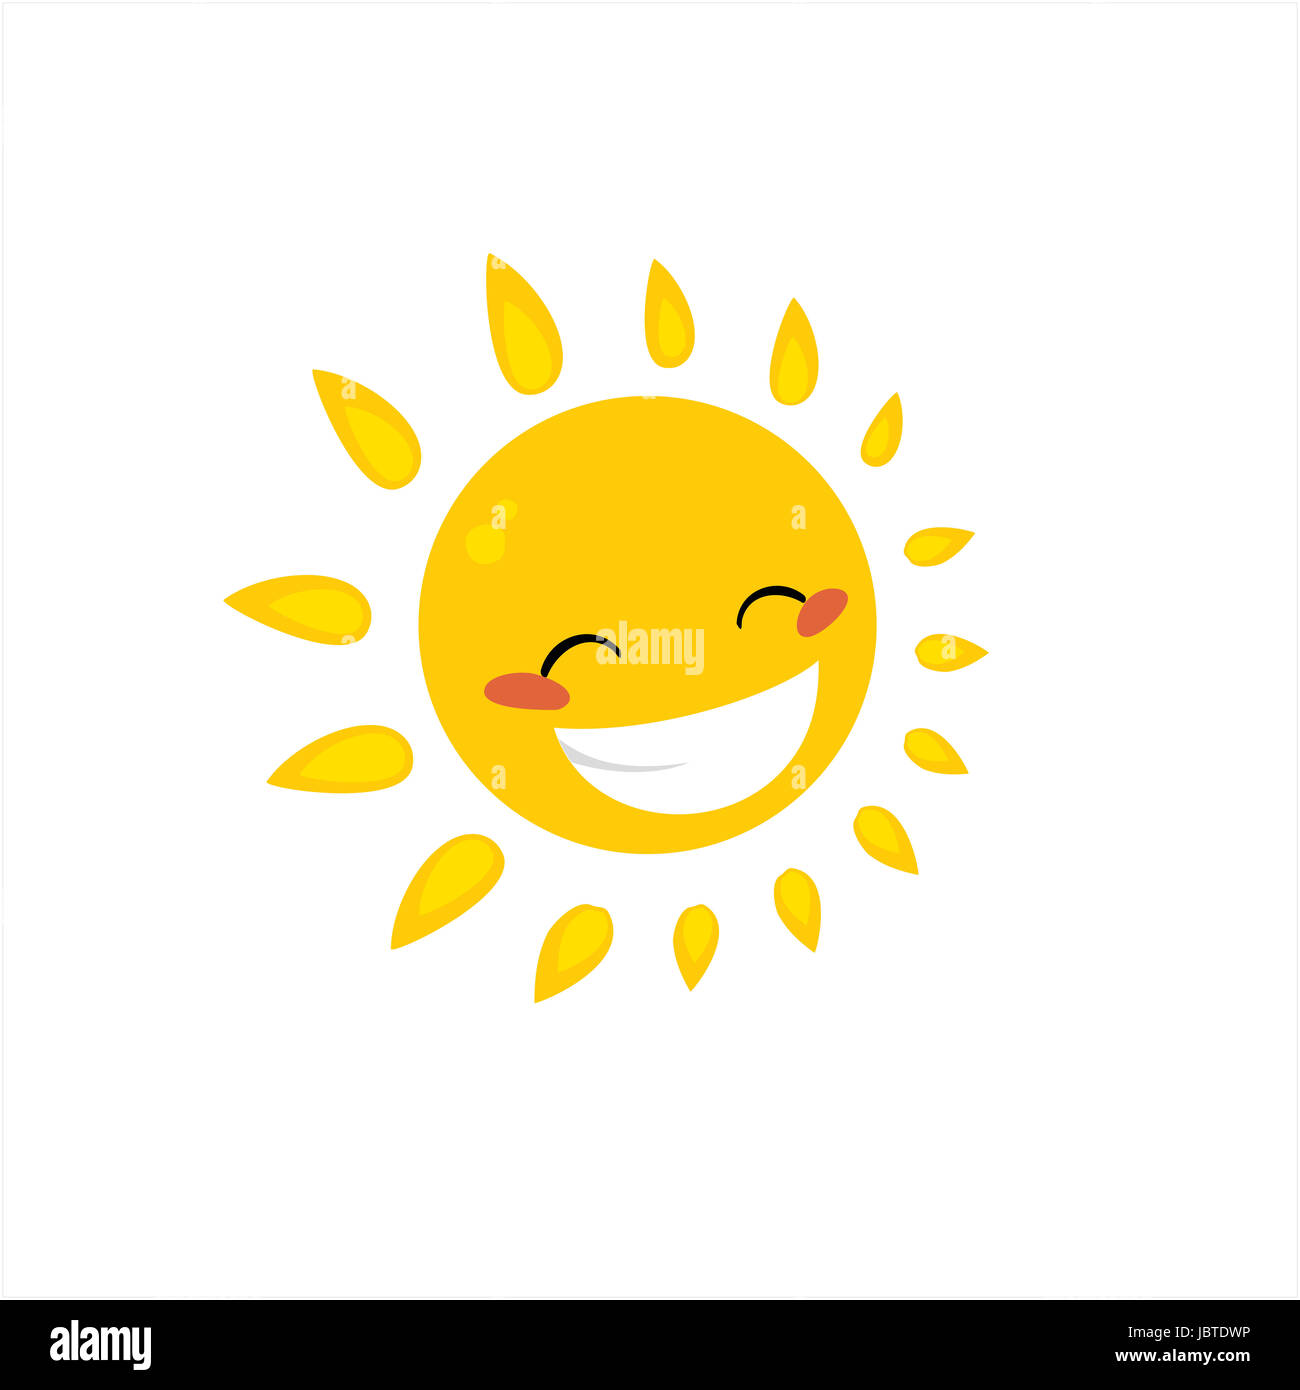 cartoon sun icon set smile face symbol Stock Photo - Alamy